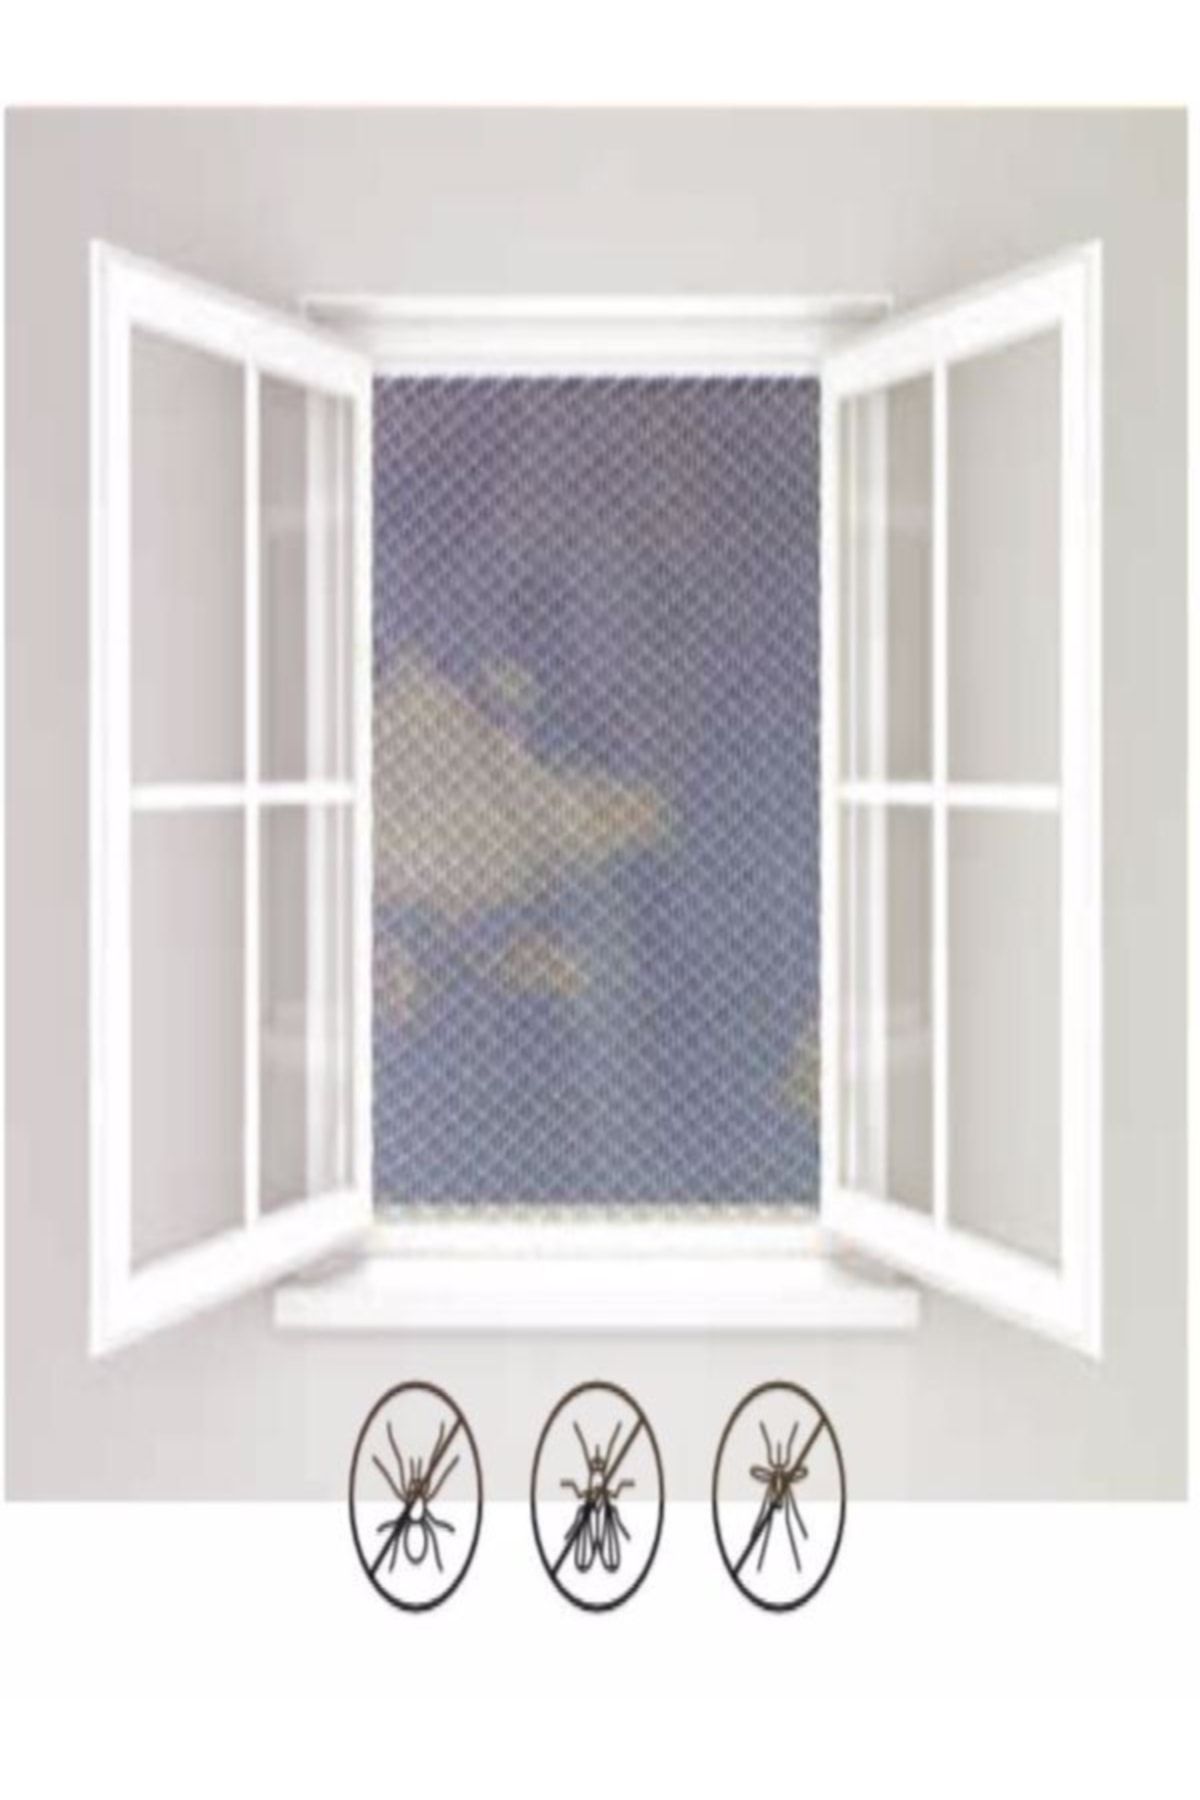 Saban Hazır Pencere Sinekliği Çift Kanat Sineklik Bantlı Pencere Sinekliği Bantlı